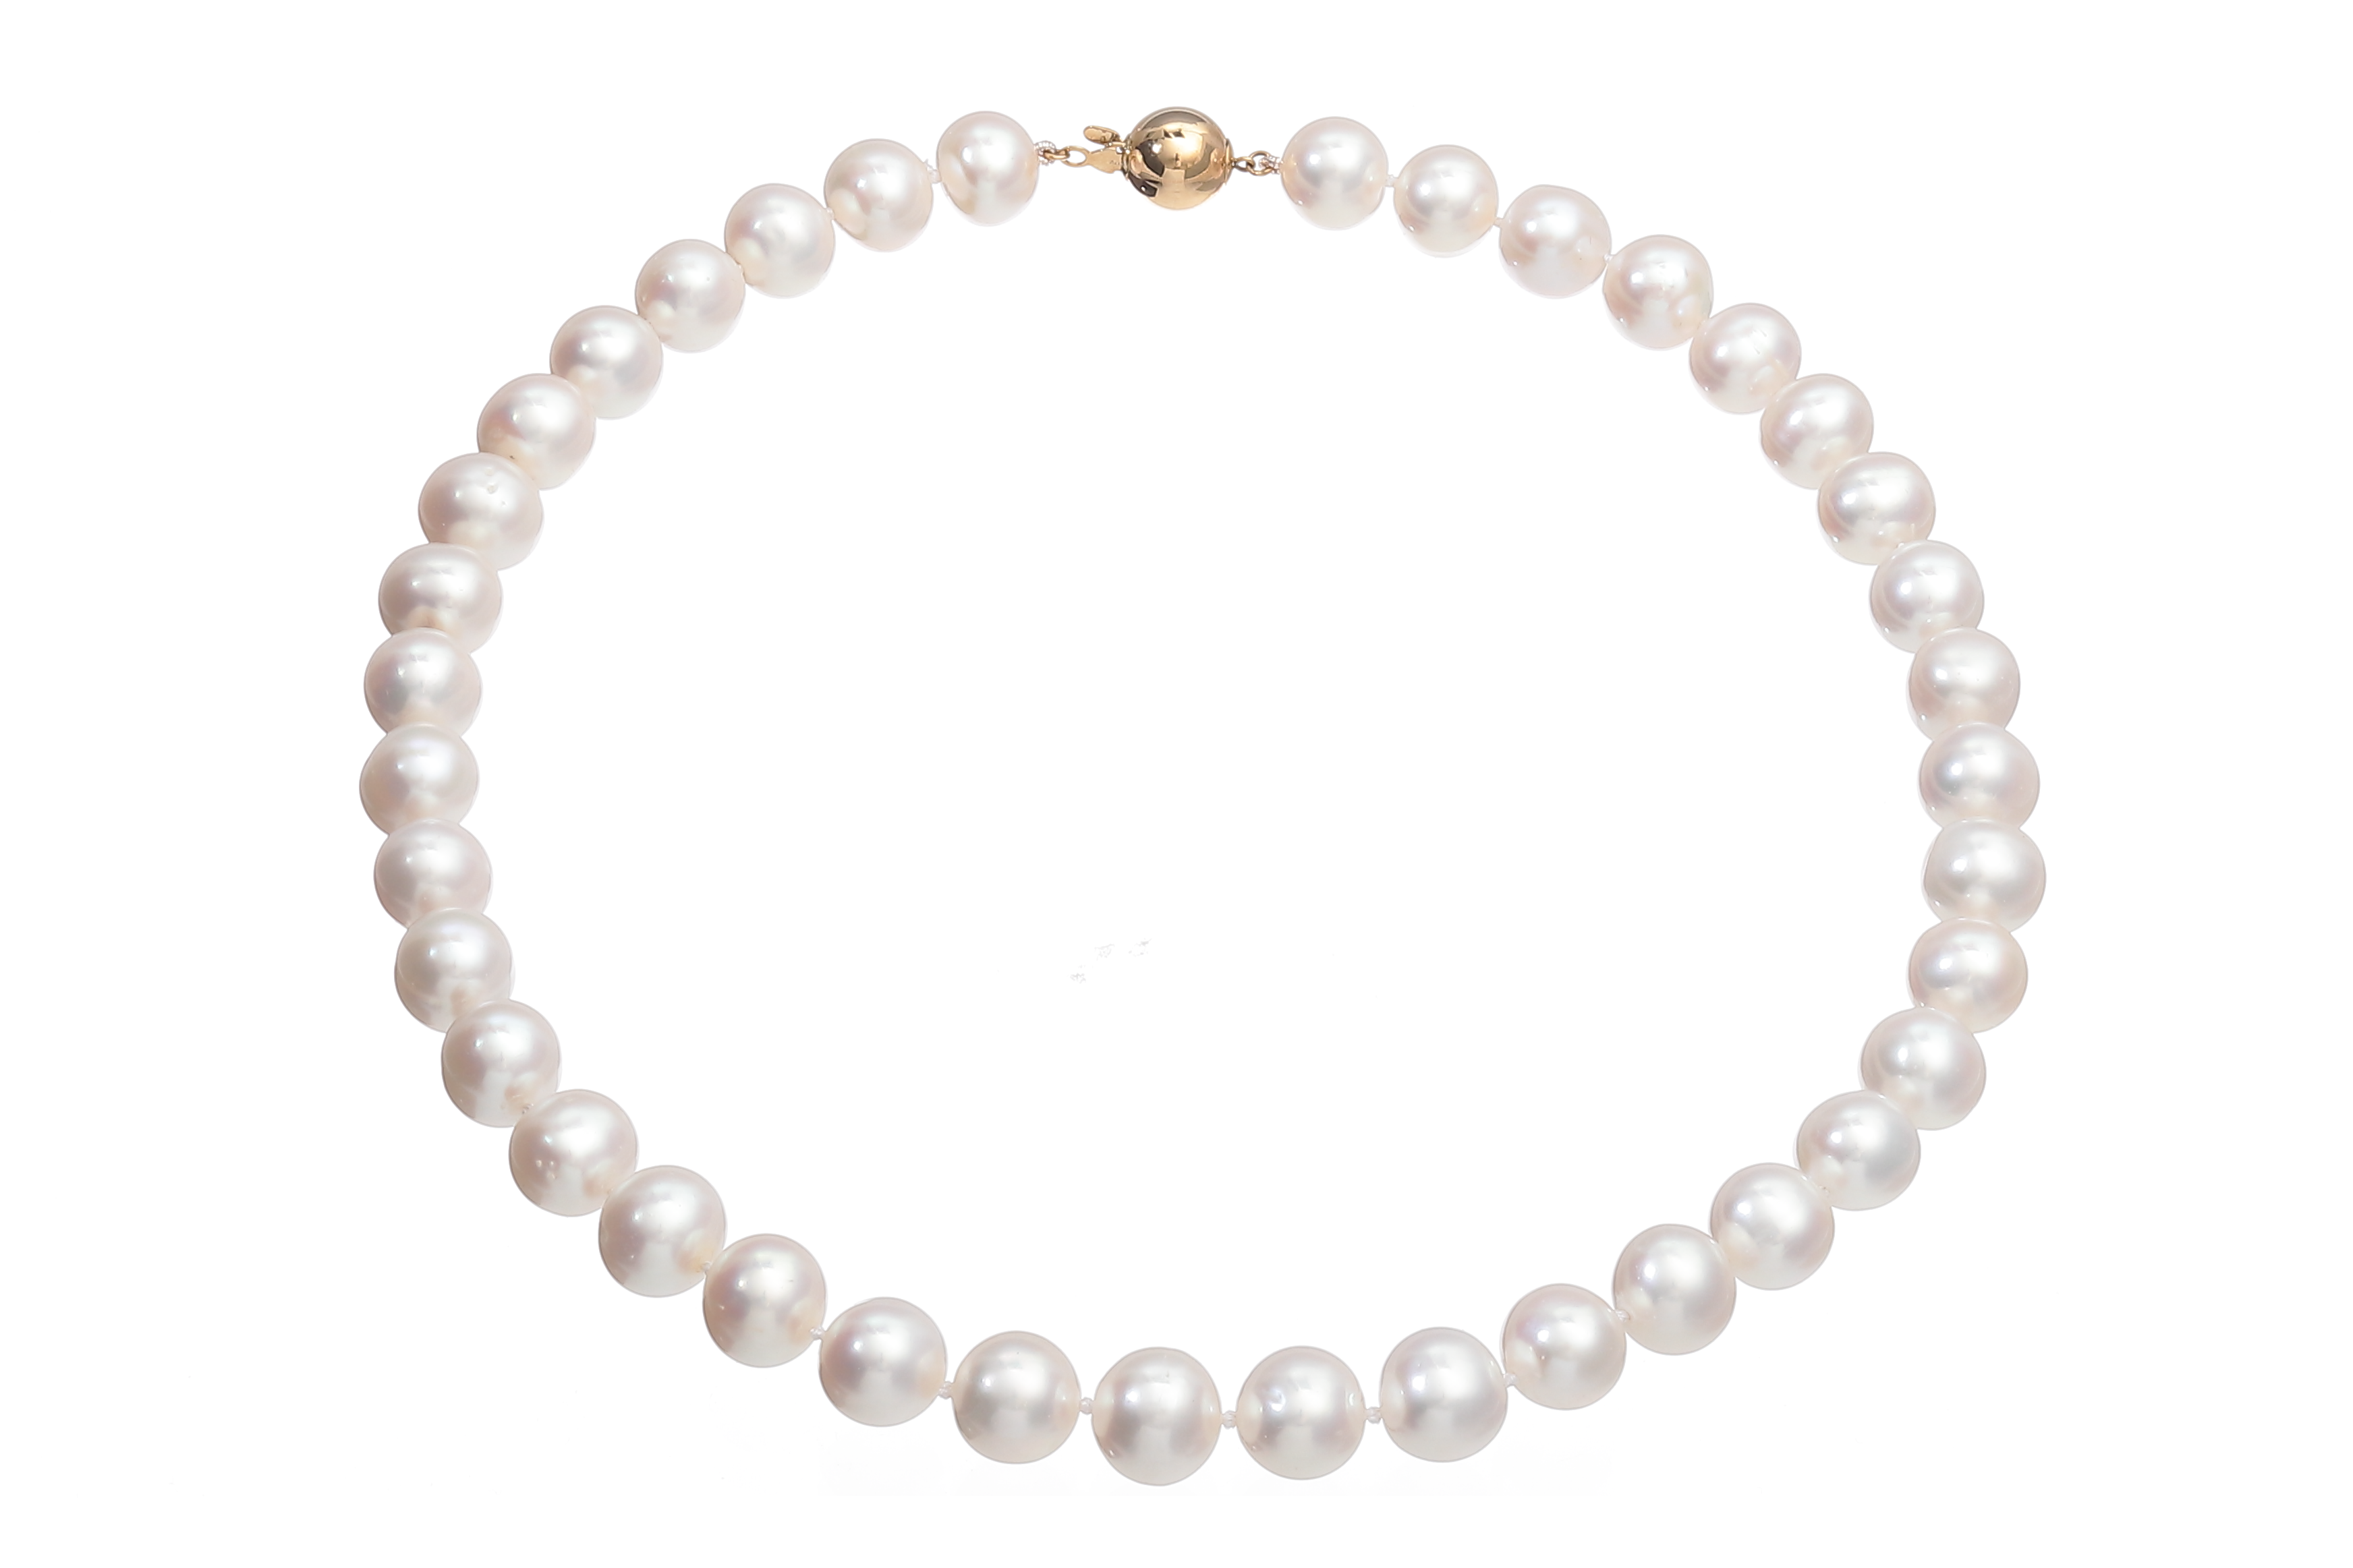 Buy VDesign 12mm South Sea Pearl Necklace Freshwater White Pearl Mala Beads  Necklace For Gift sacche Moti Ki Mala सच्चे मोती की माला | पर्ल नेकलेस at  Amazon.in